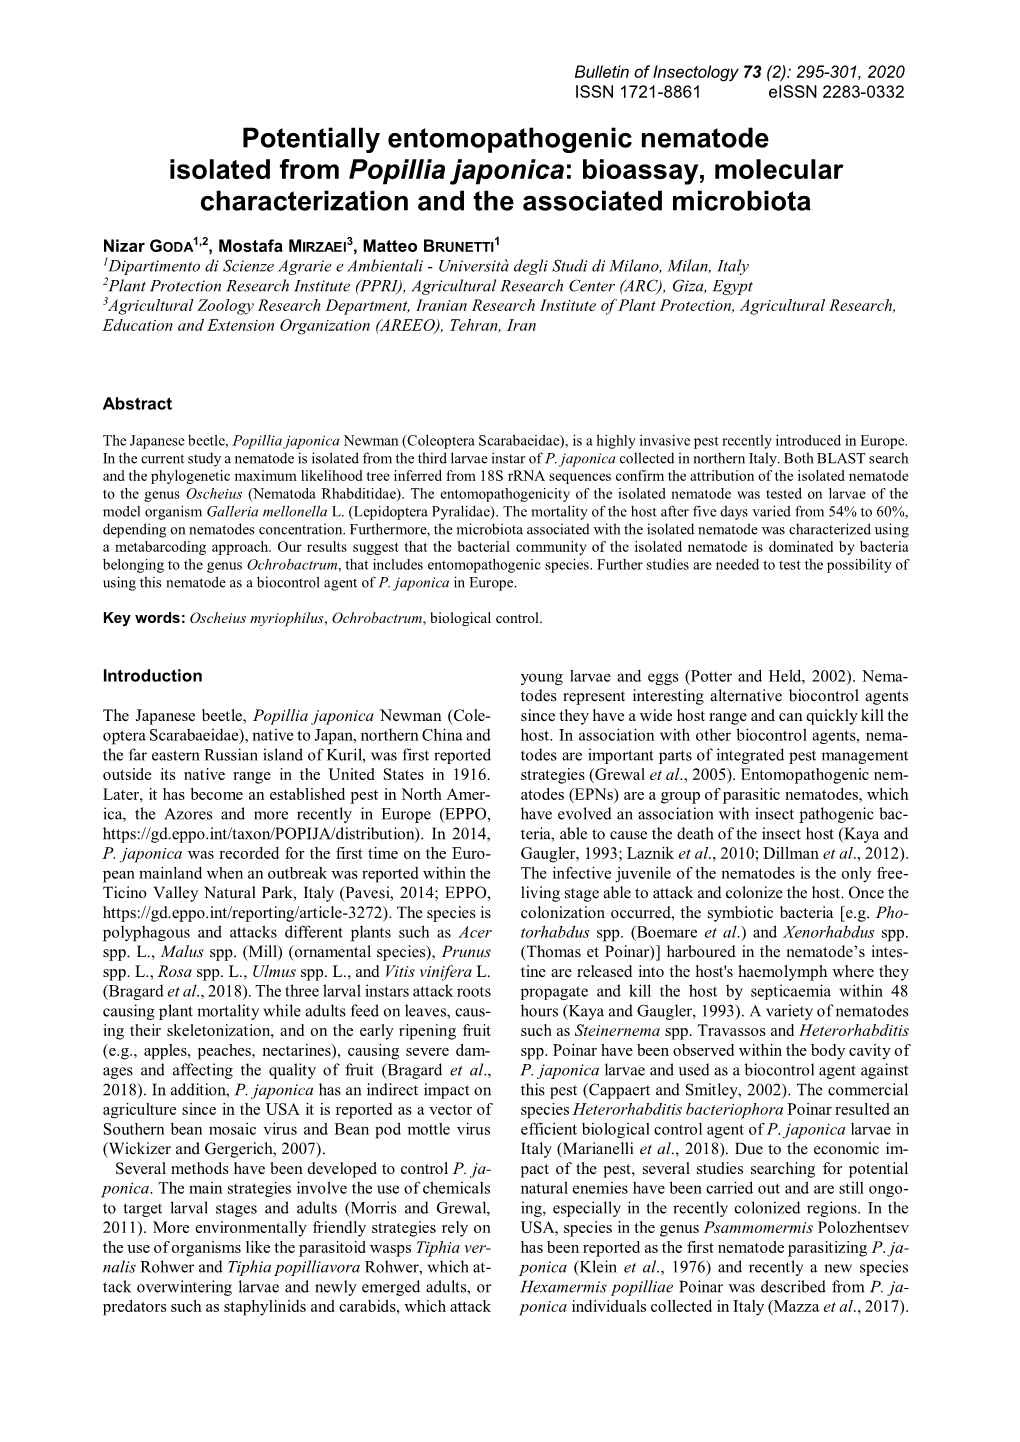 Potentially Entomopathogenic Nematode Isolated from Popillia Japonica: Bioassay, Molecular Characterization and the Associated Microbiota